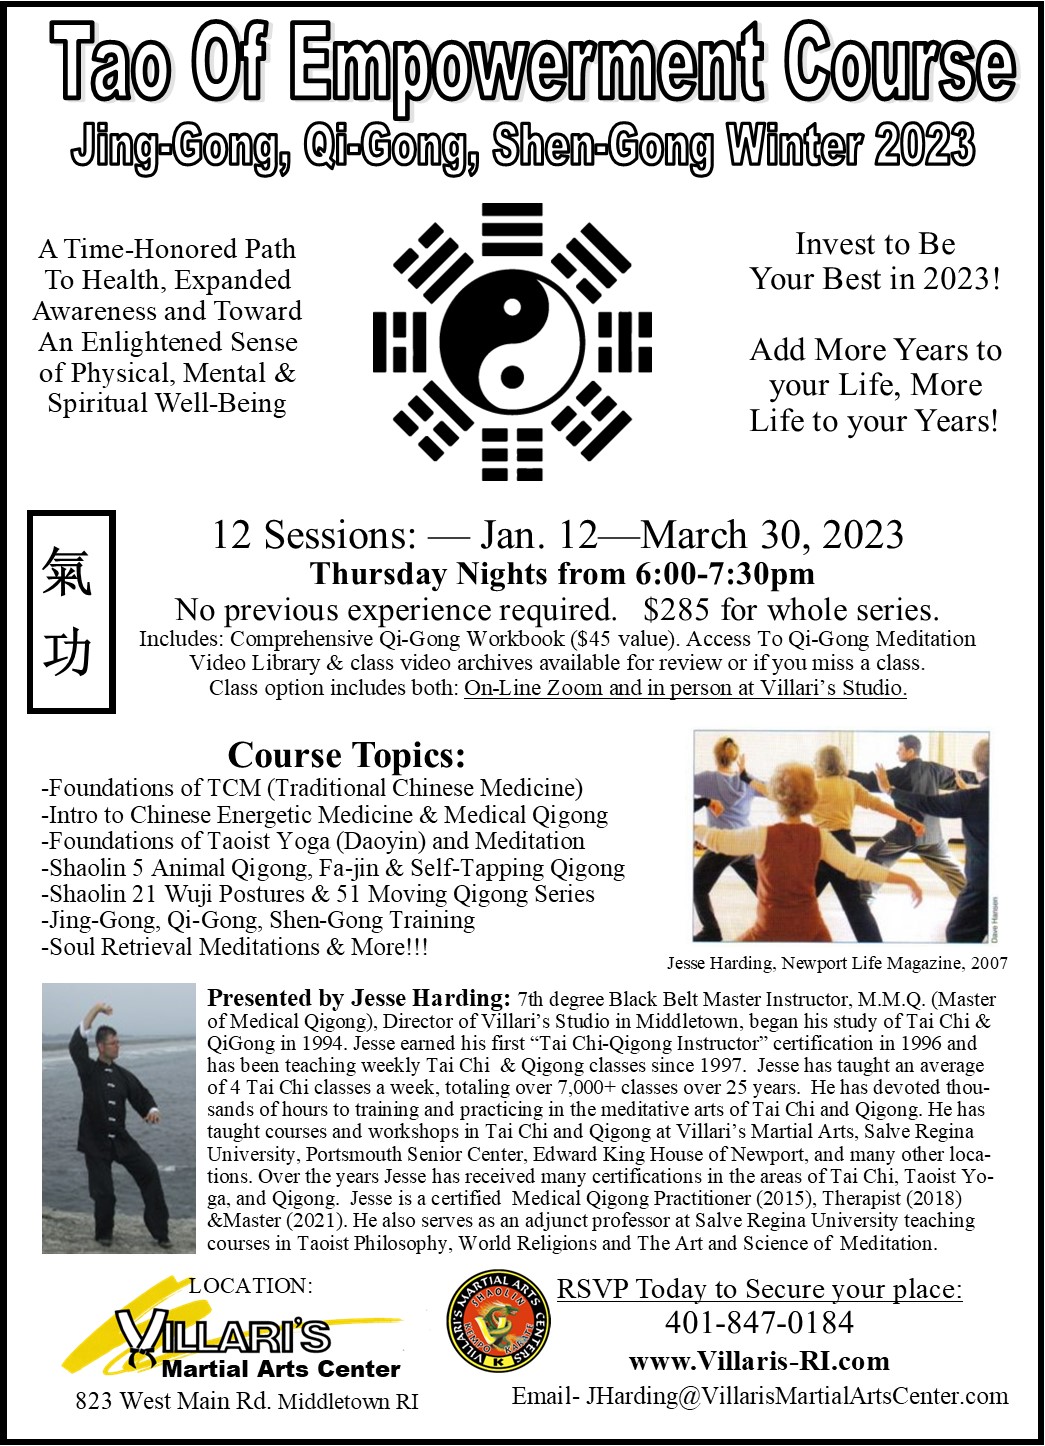 Tao of Empowerment Course Winter 2023 Jesse Harding villaris-ri.com